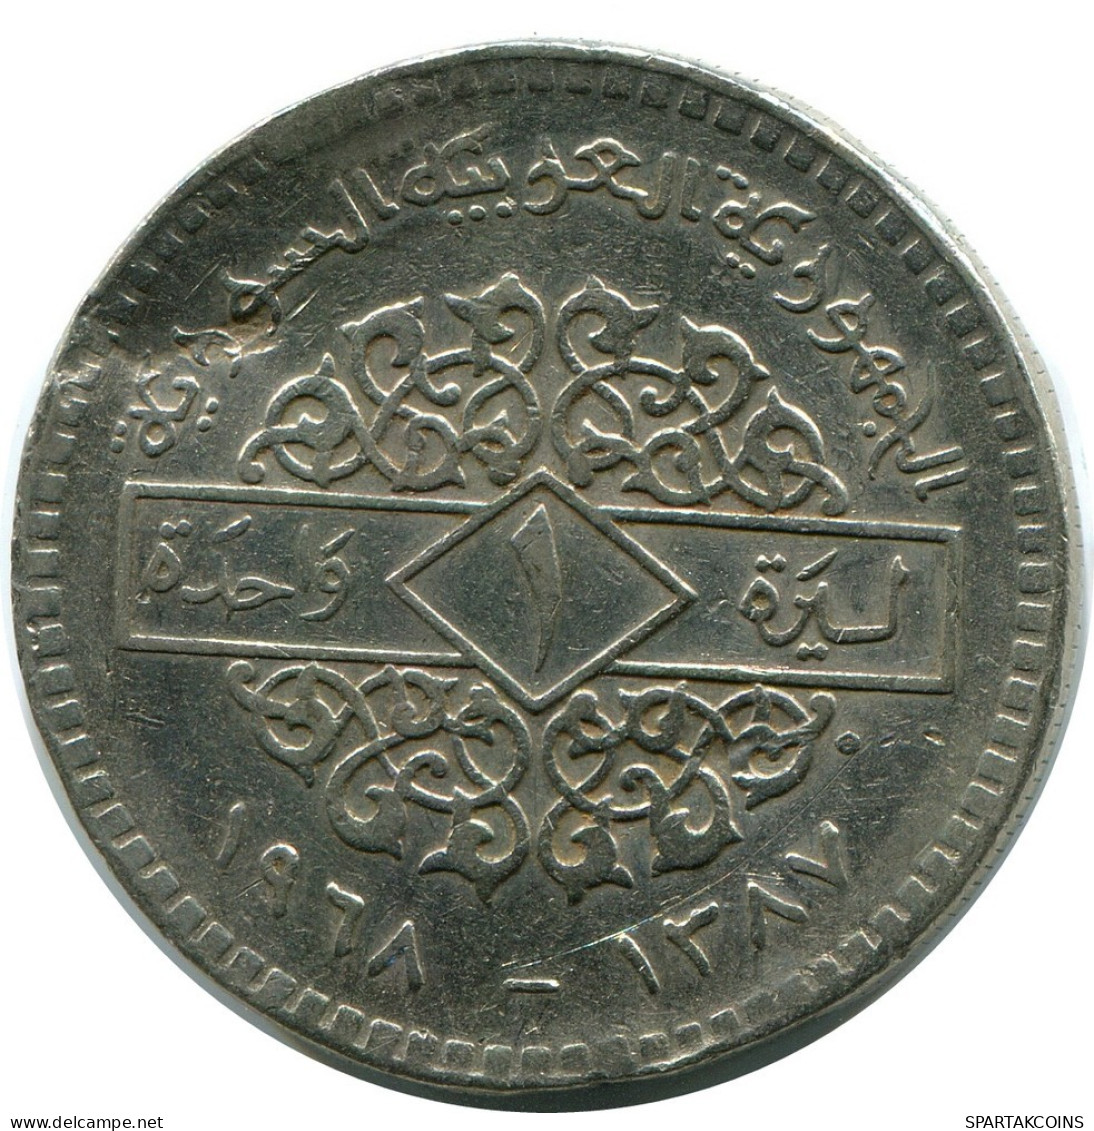 1 LIRA 1968 SYRIA Islamic Coin #AZ330.U.A - Syria